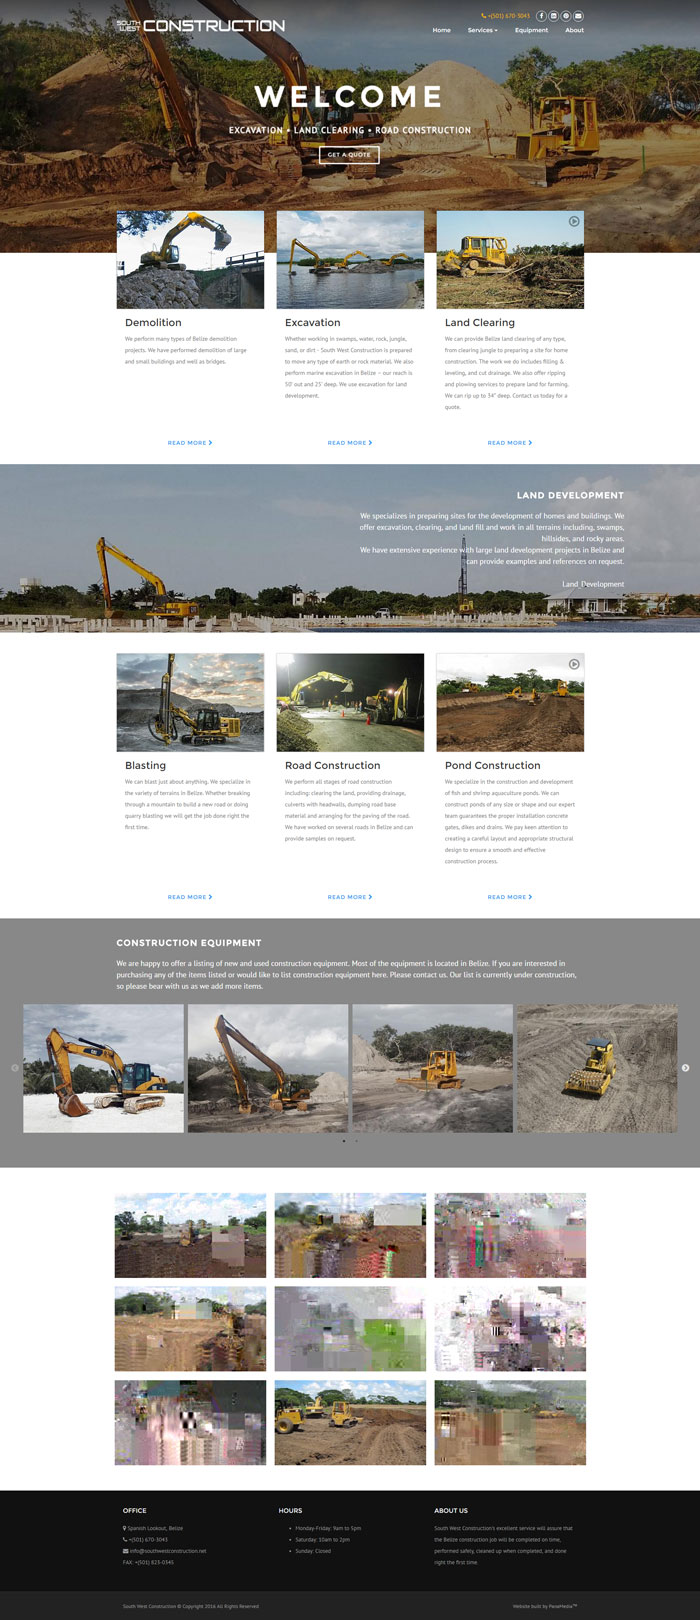 portfolio-website-south-west-construction-1